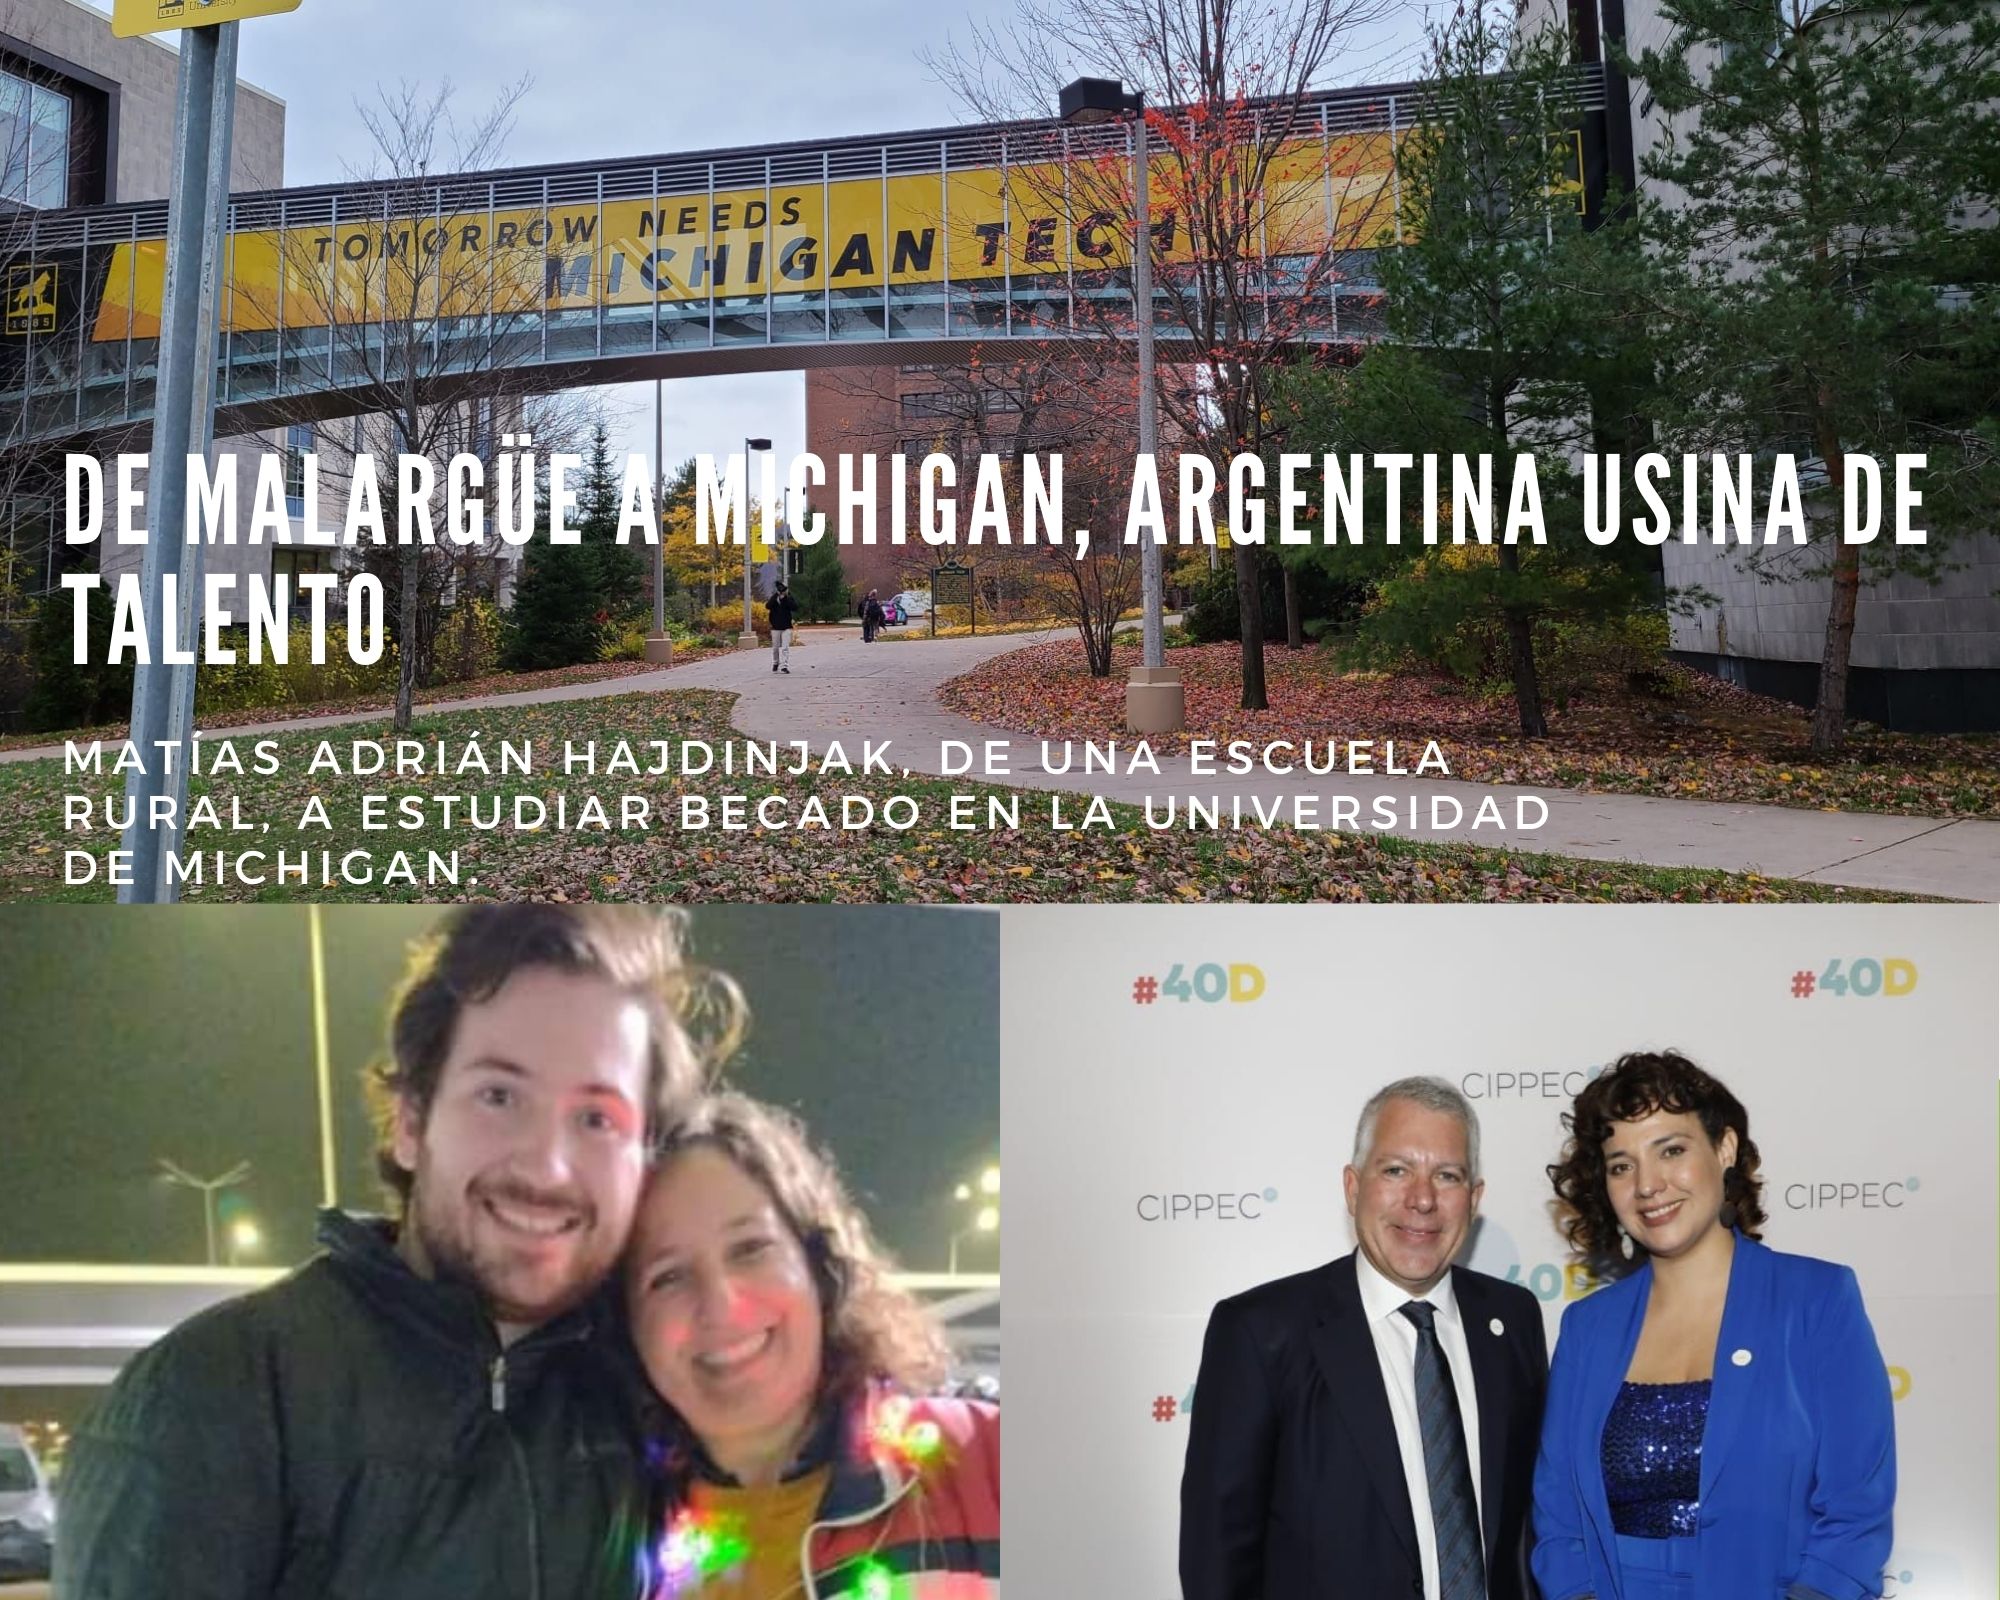 De Malargüe a Michigan, Argentina usina de talento